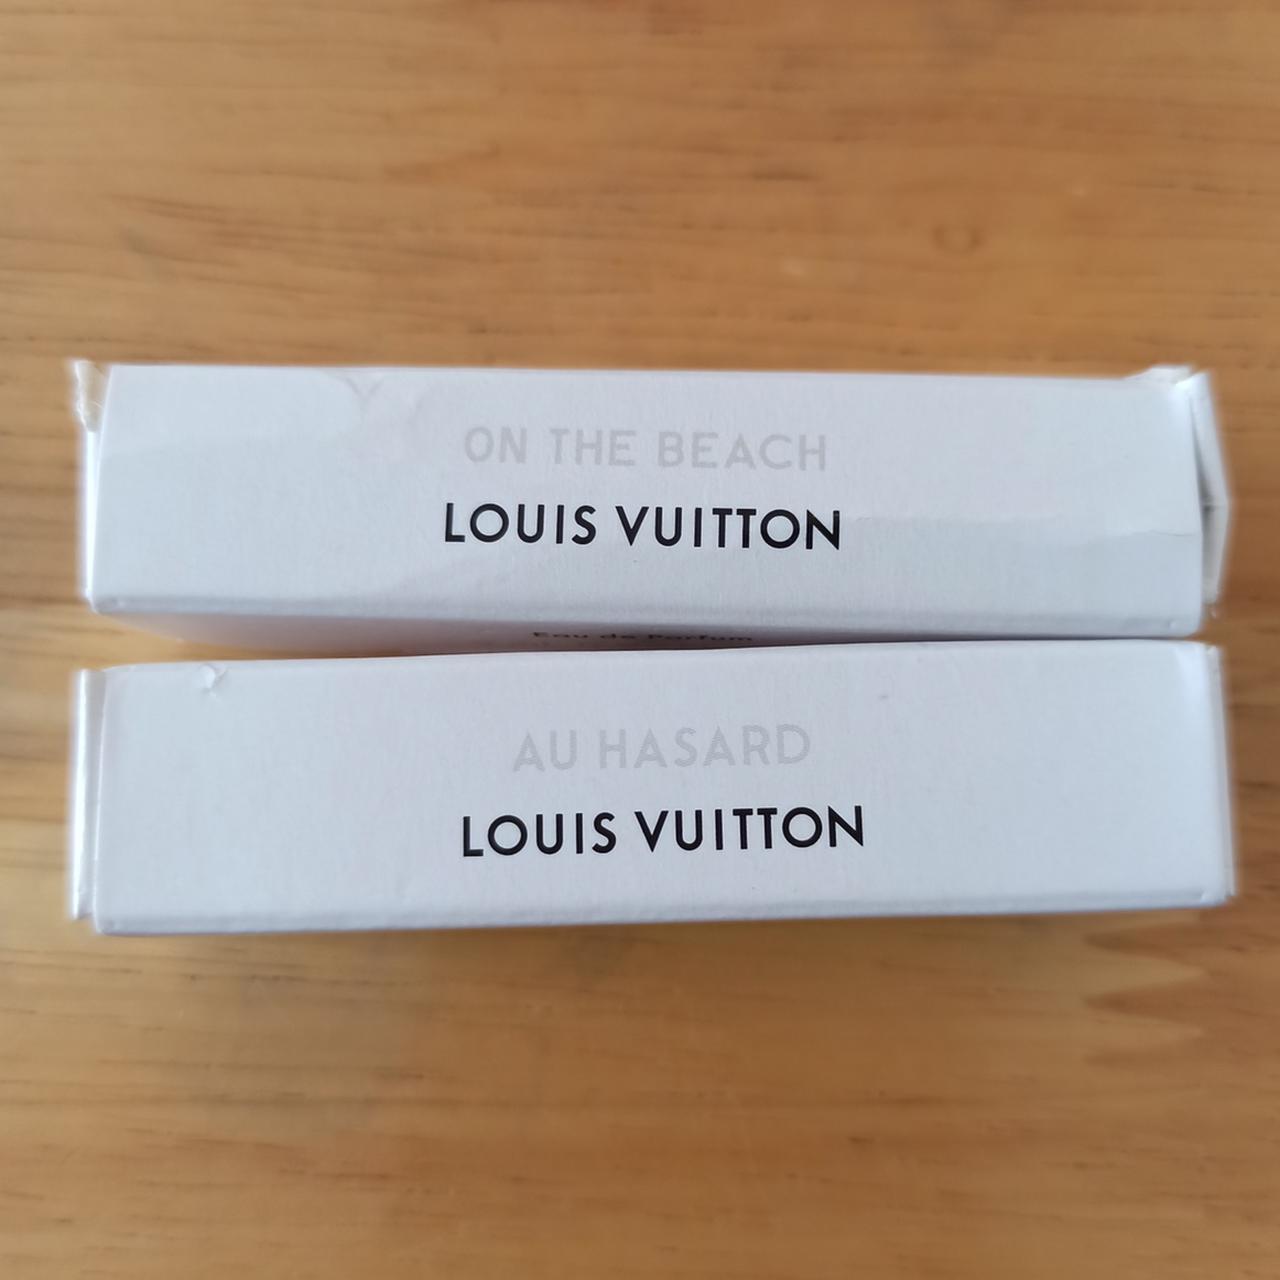 Louis Vuitton - Au Hasard for Women